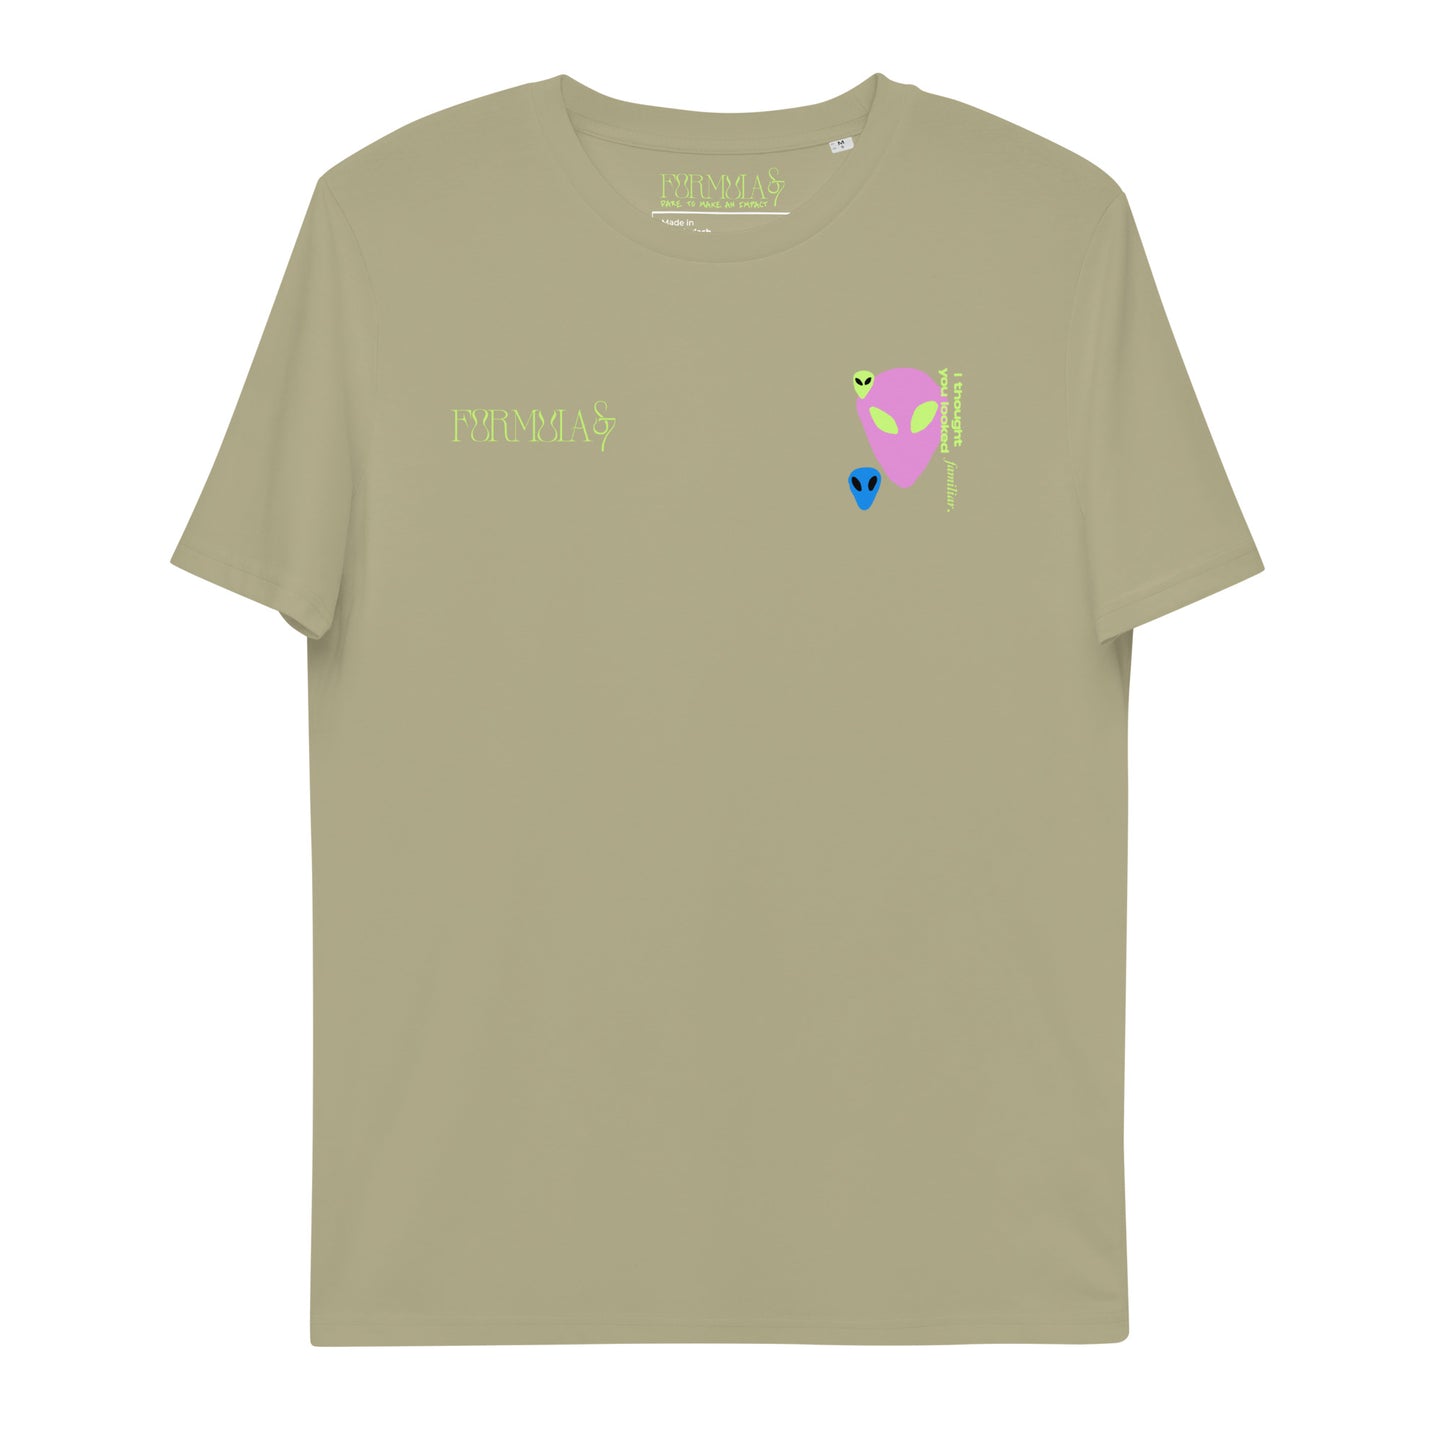 Familiar Aliens Unisex organic cotton t-shirt